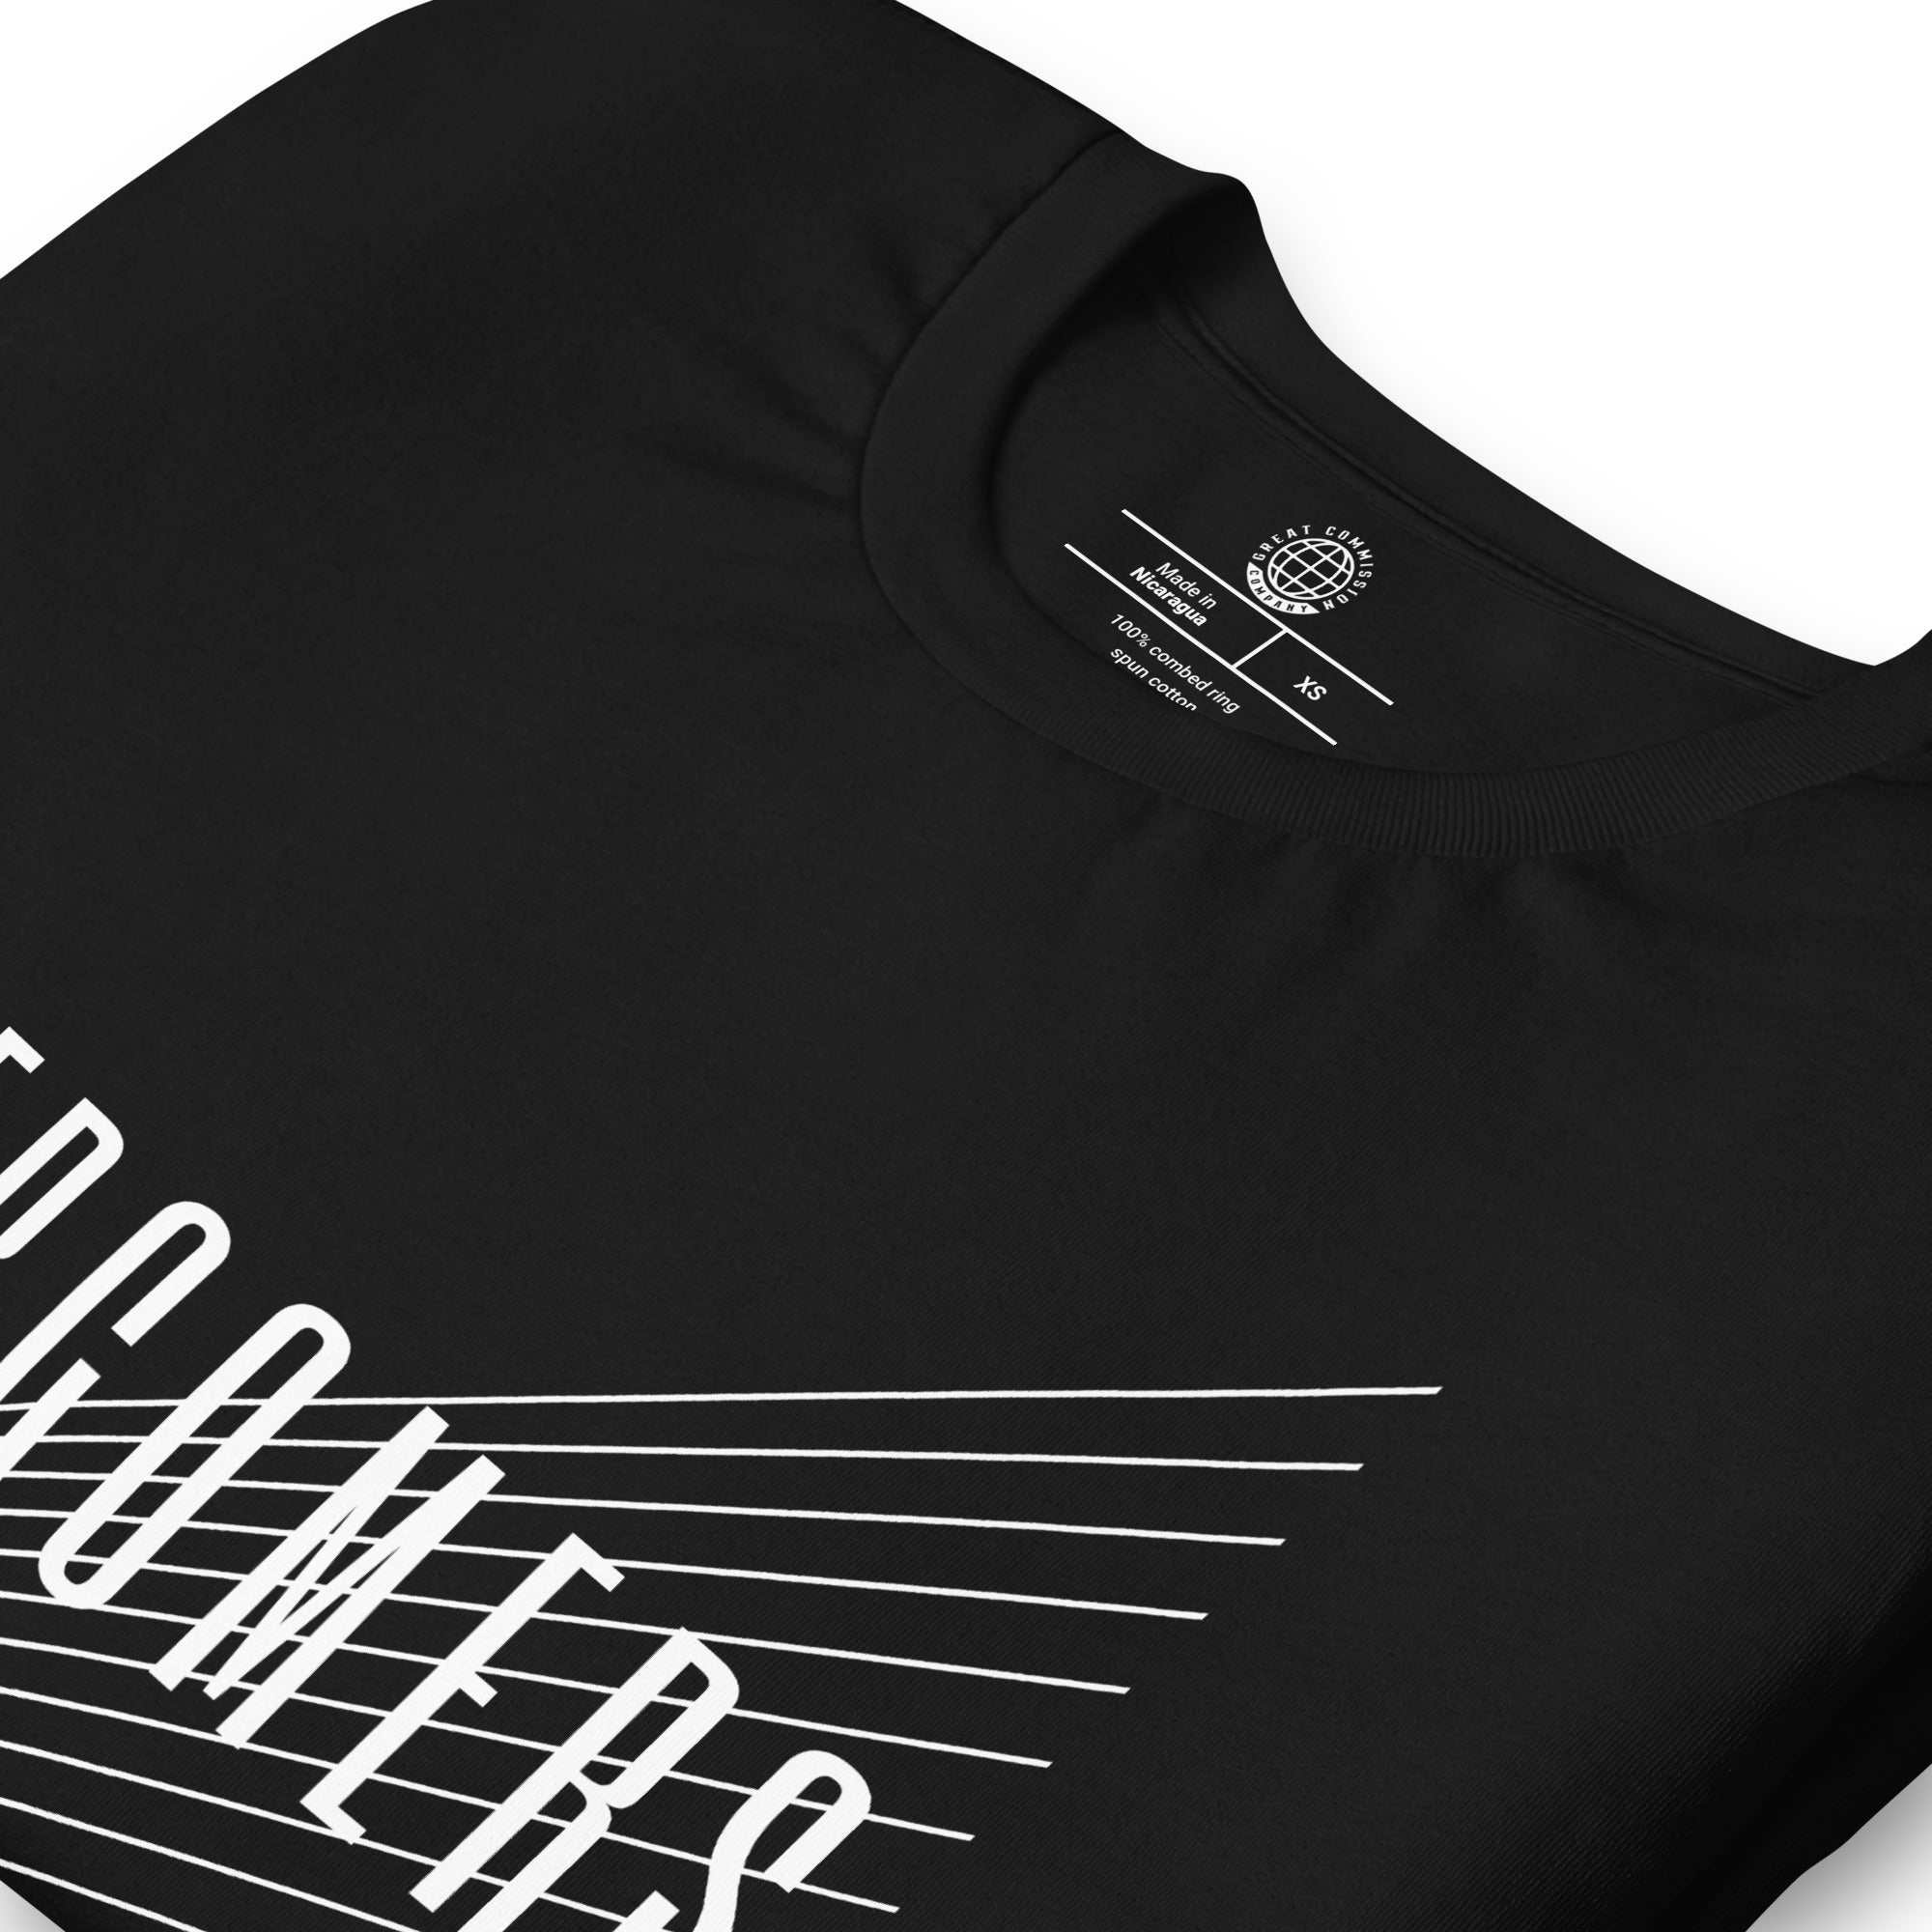 Overcomers Signature T-Shirt - Black - Close Up